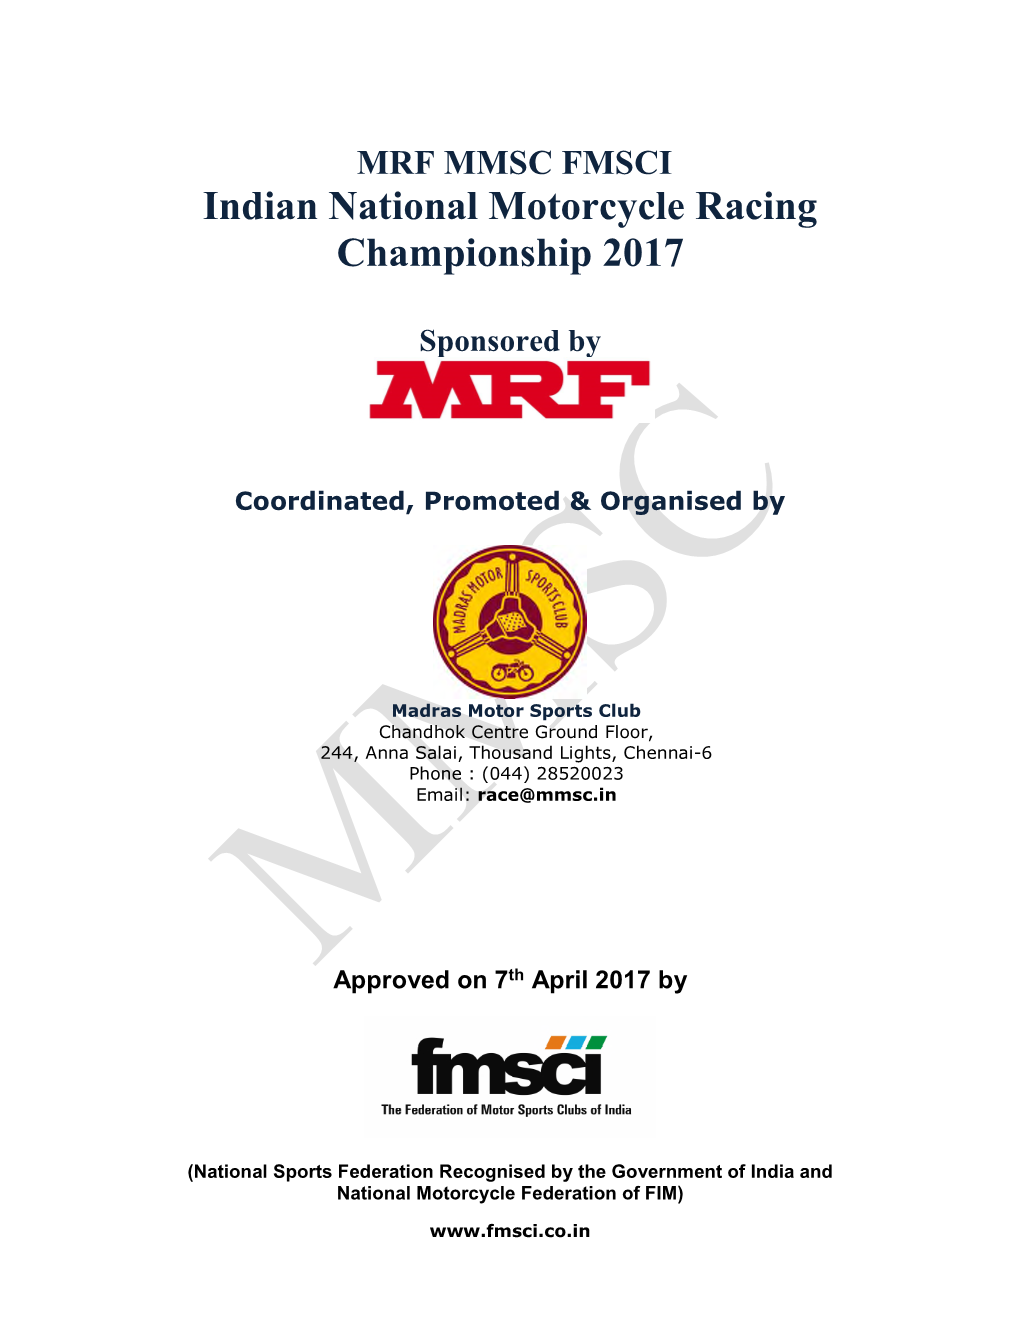 MMSC FMSCI Indian National Motorcycle Racing Championship 2017